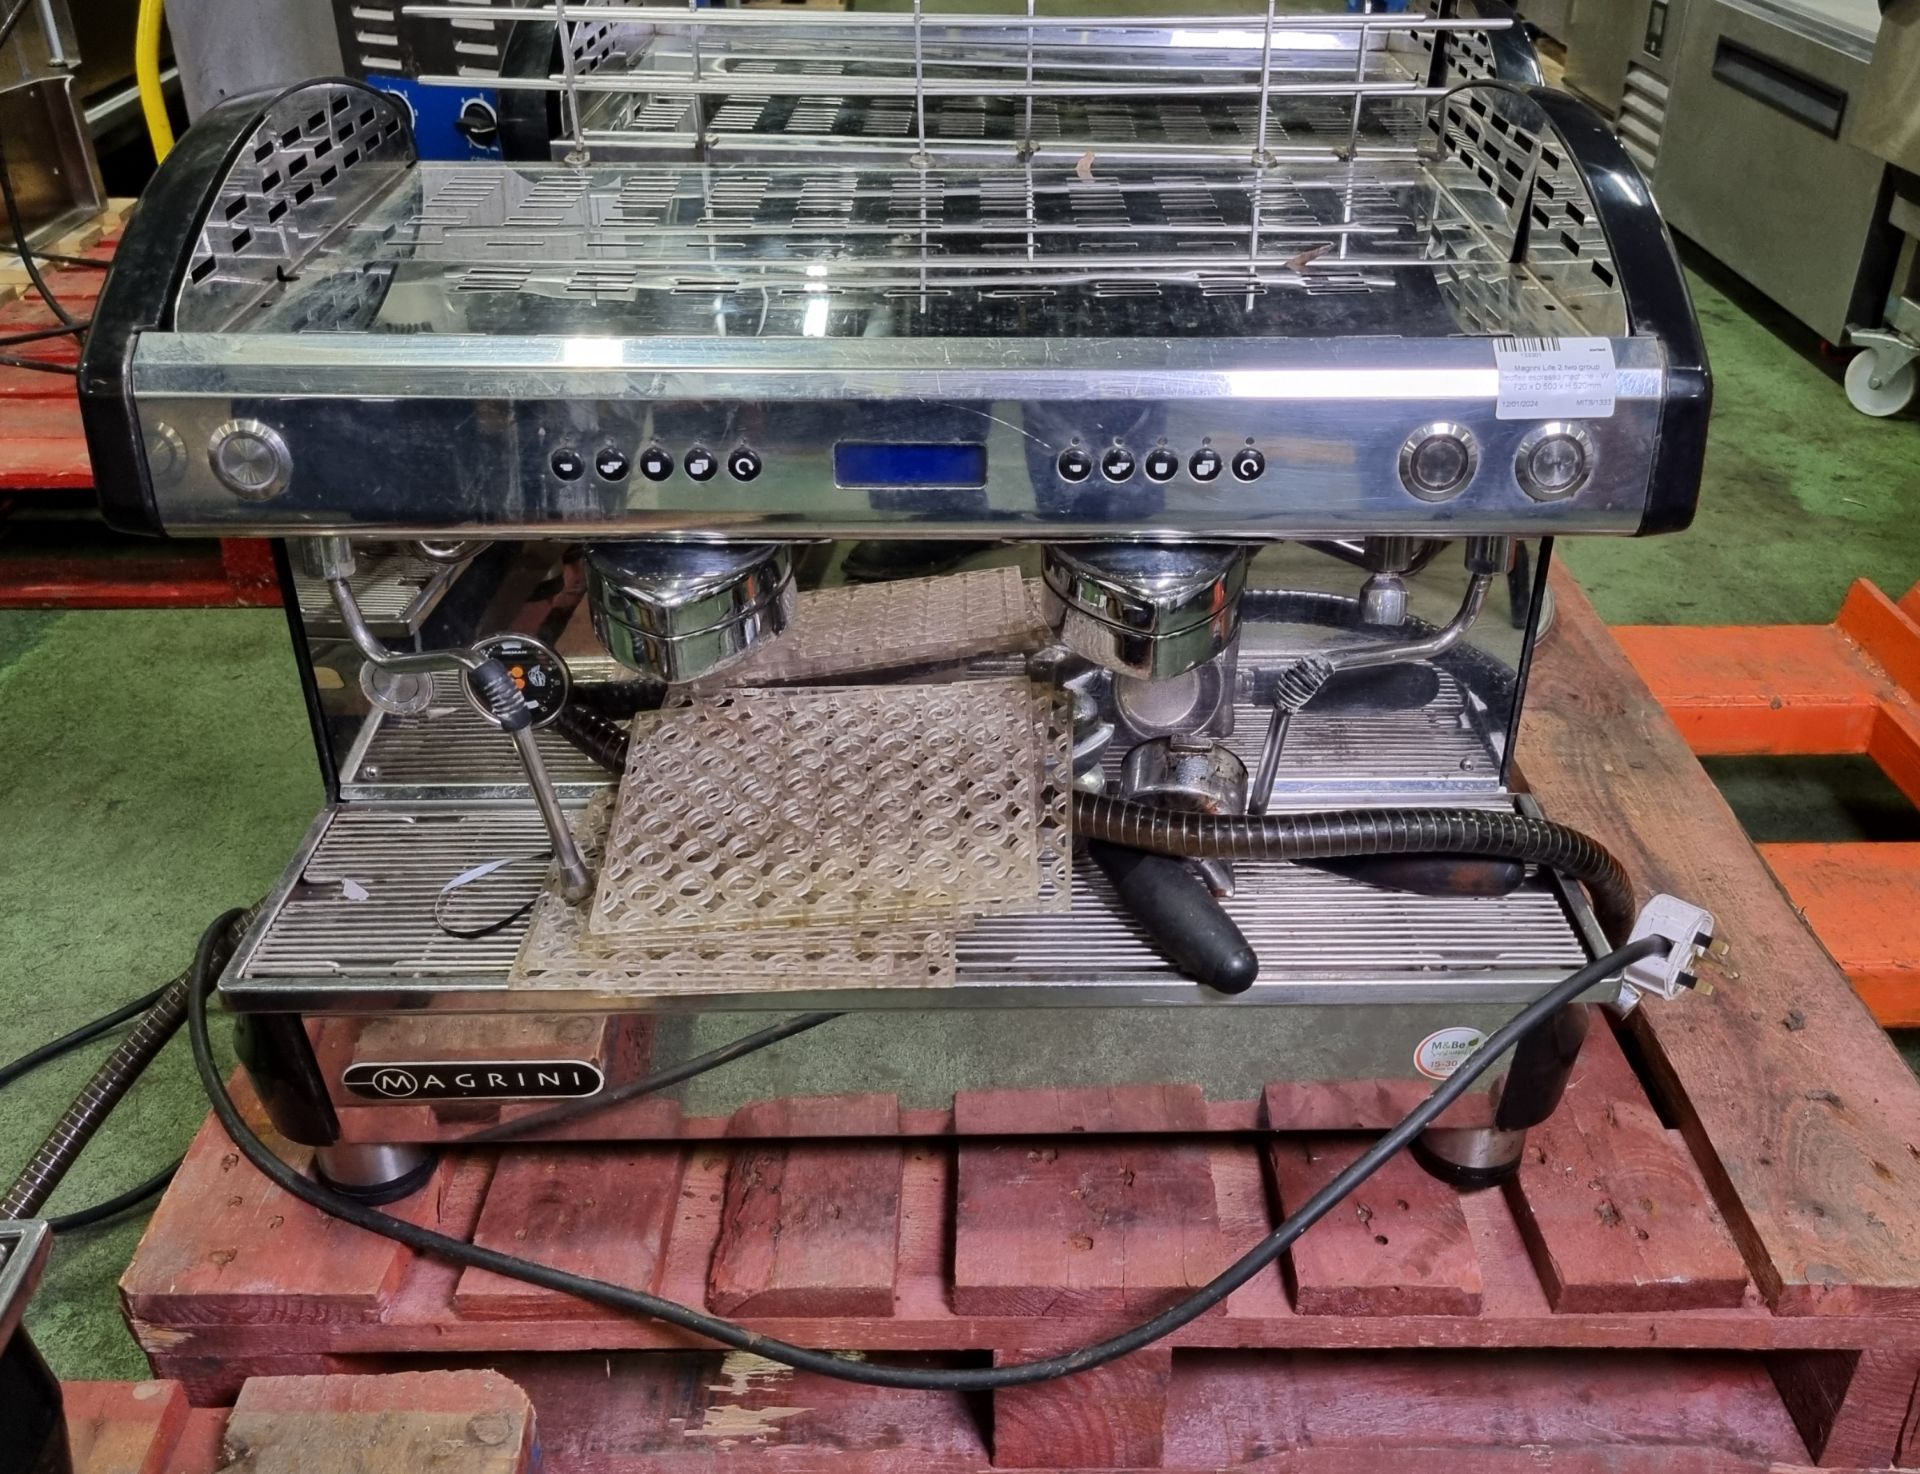 Magrini Life 2 two group coffee espresso machine - W 720 x D 500 x H 520mm